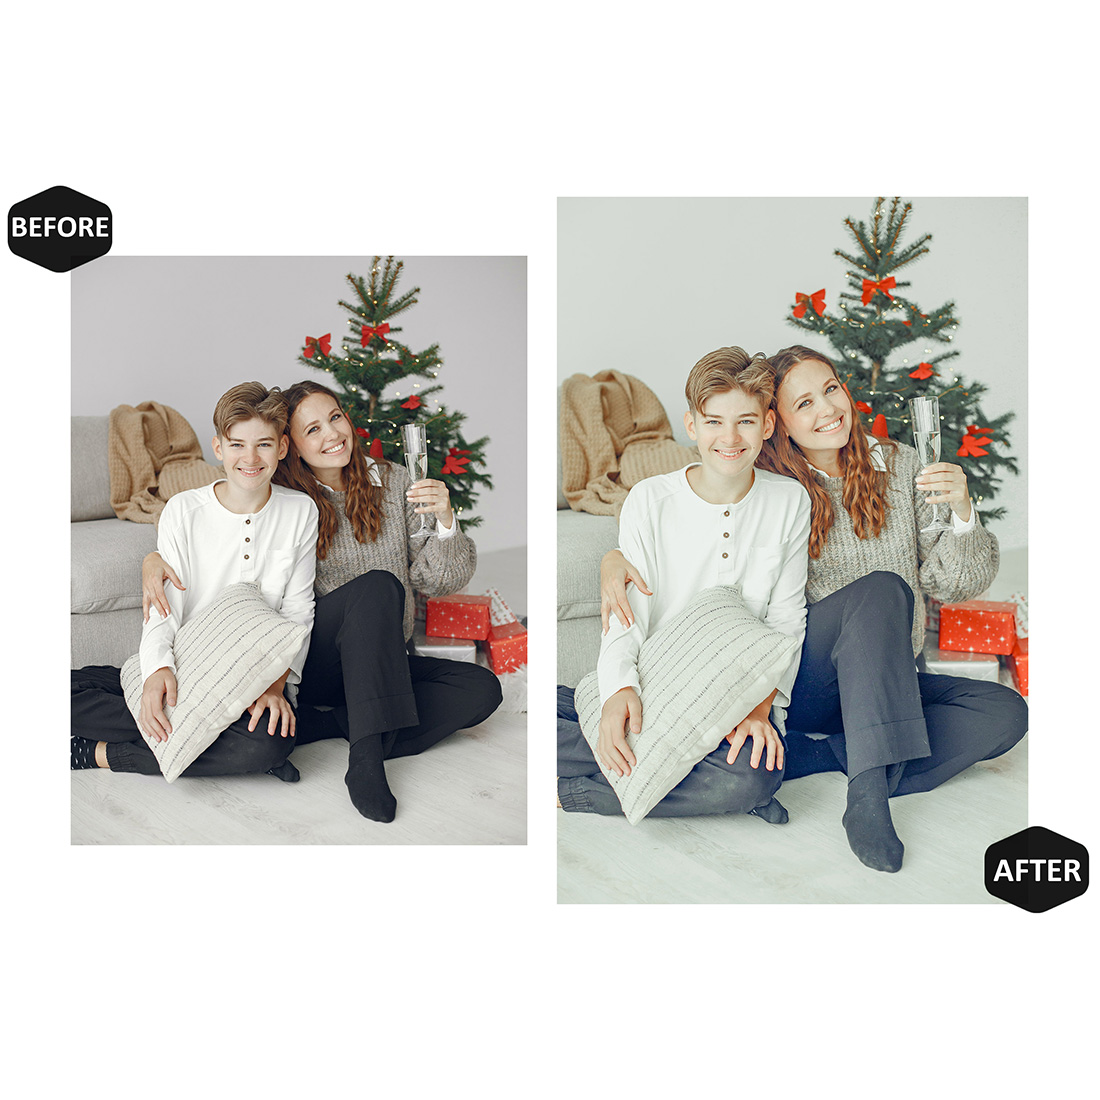 12 Delights December Lightroom Presets, Christmas Mobile Preset, White Xmas Desktop LR Filter Scheme Lifestyle Theme For Portrait, Instagram preview image.